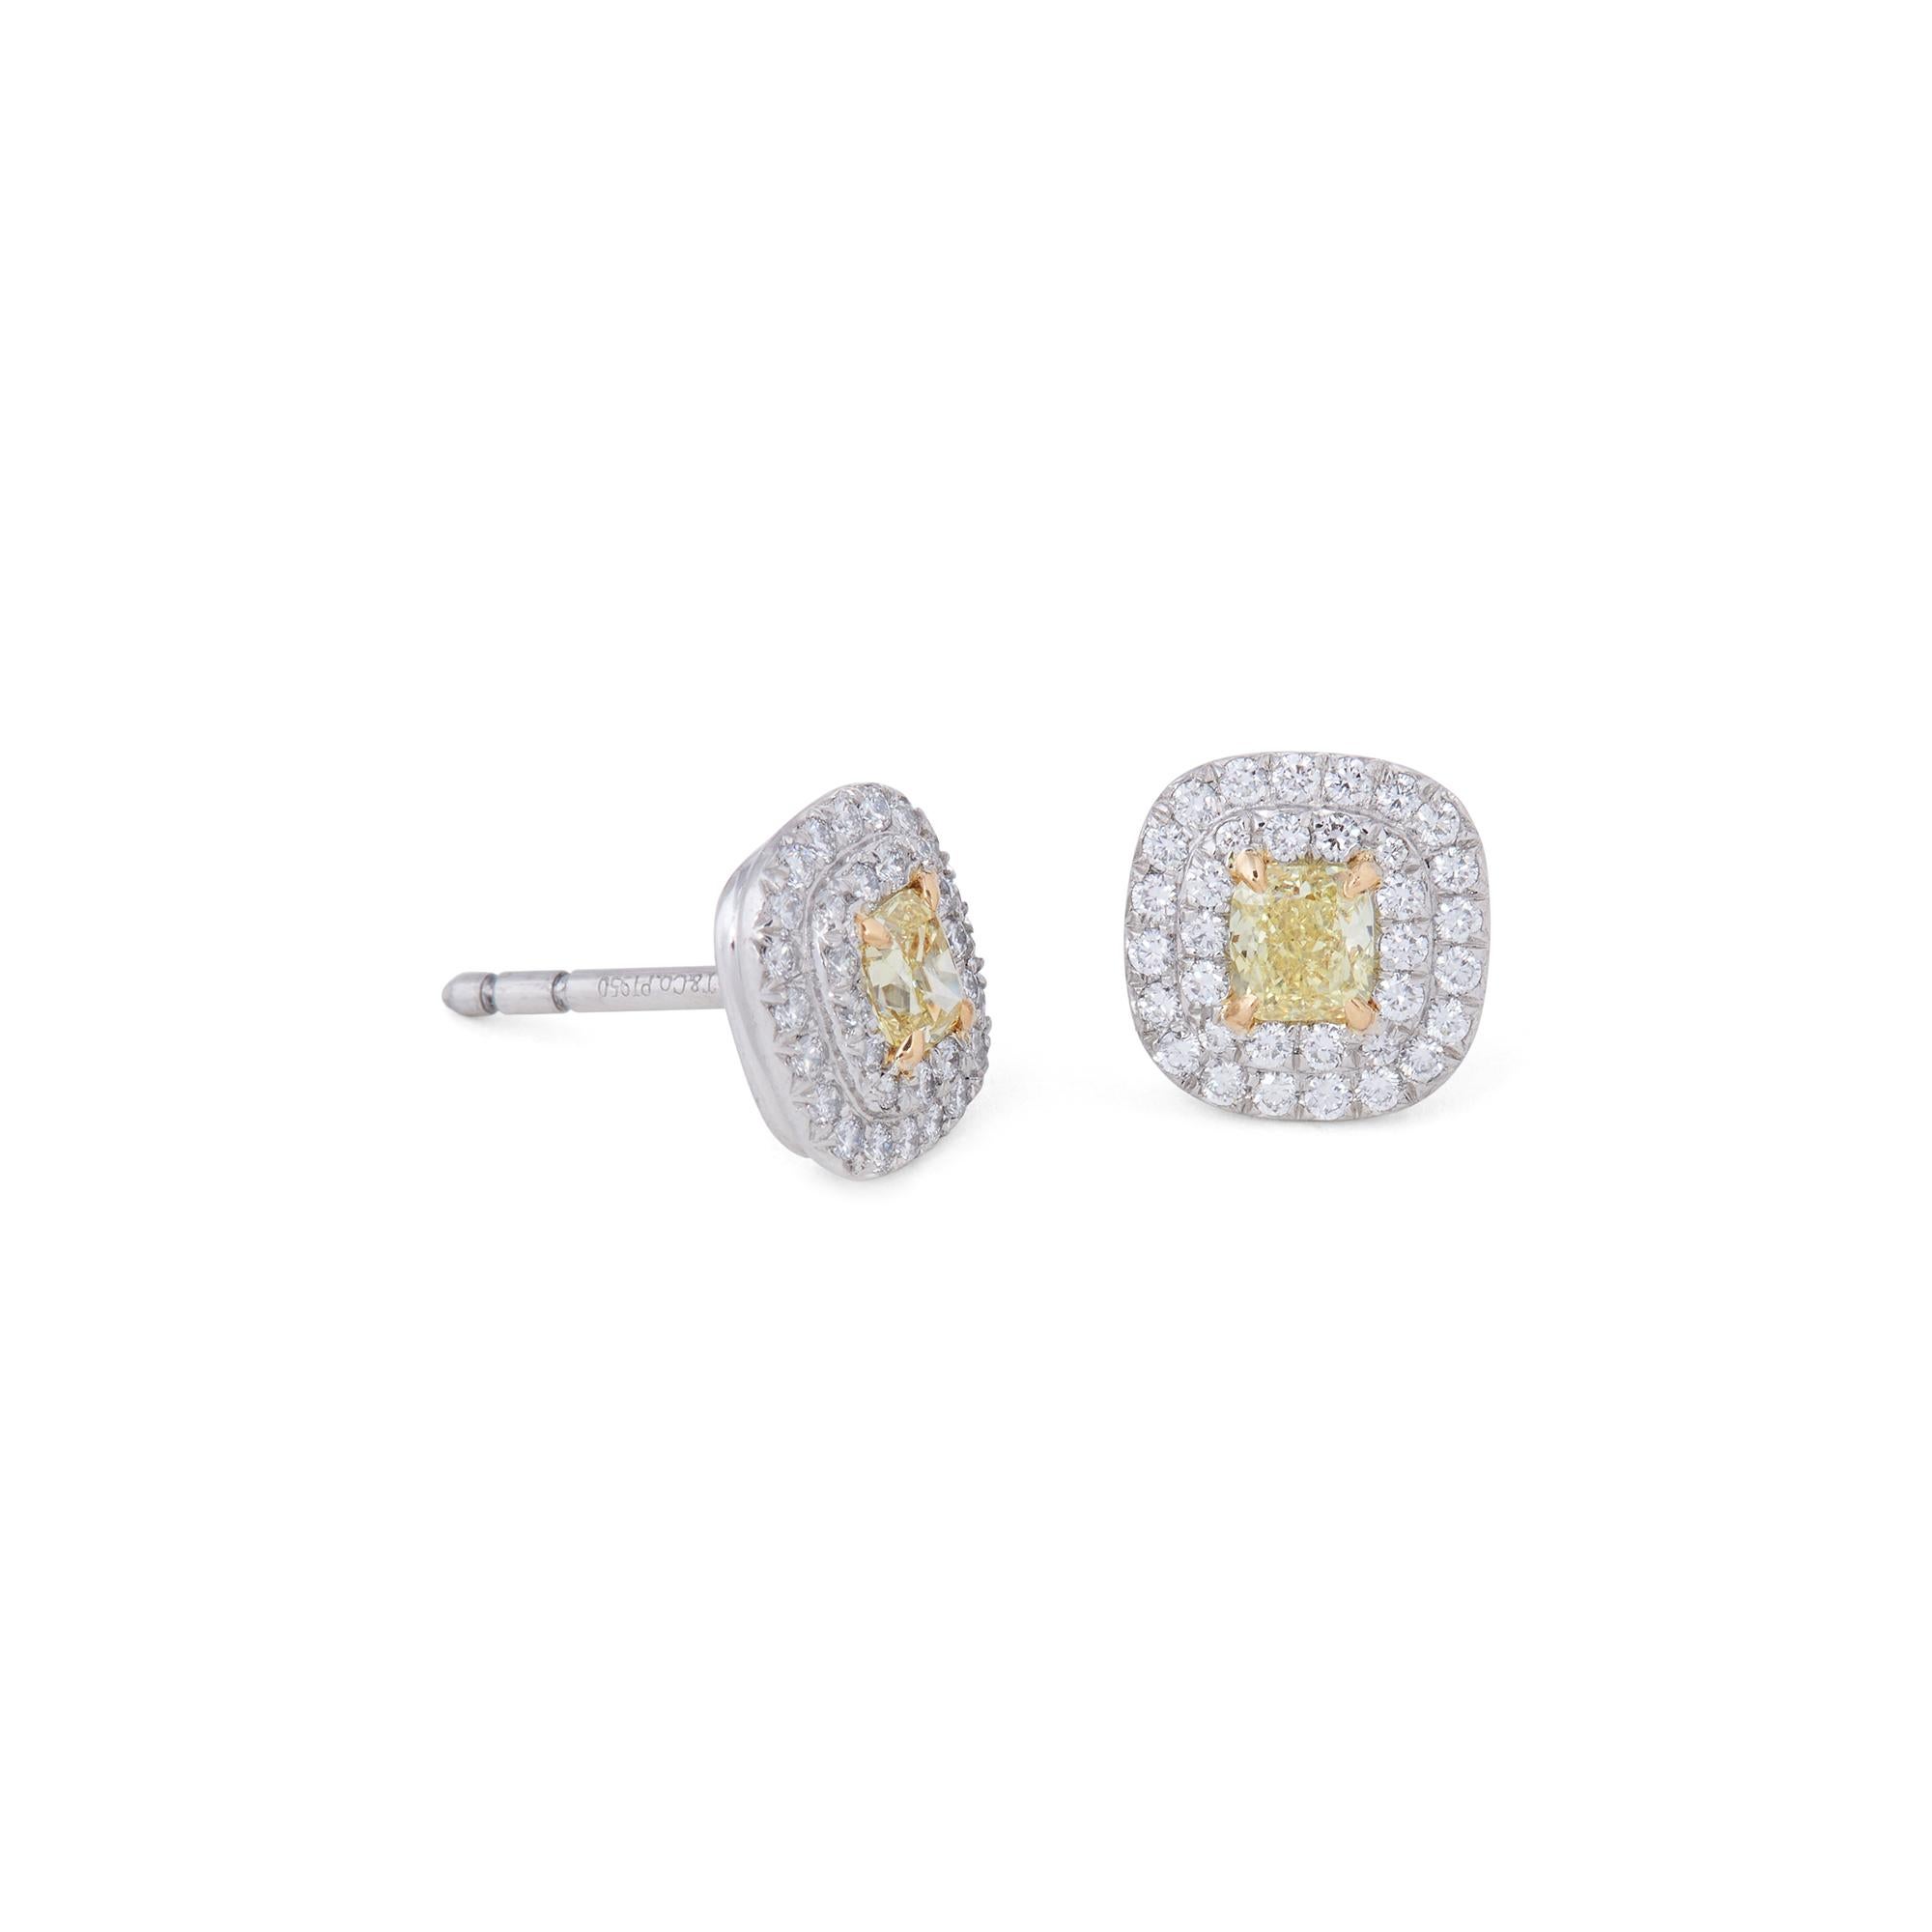 tiffany yellow diamond earrings